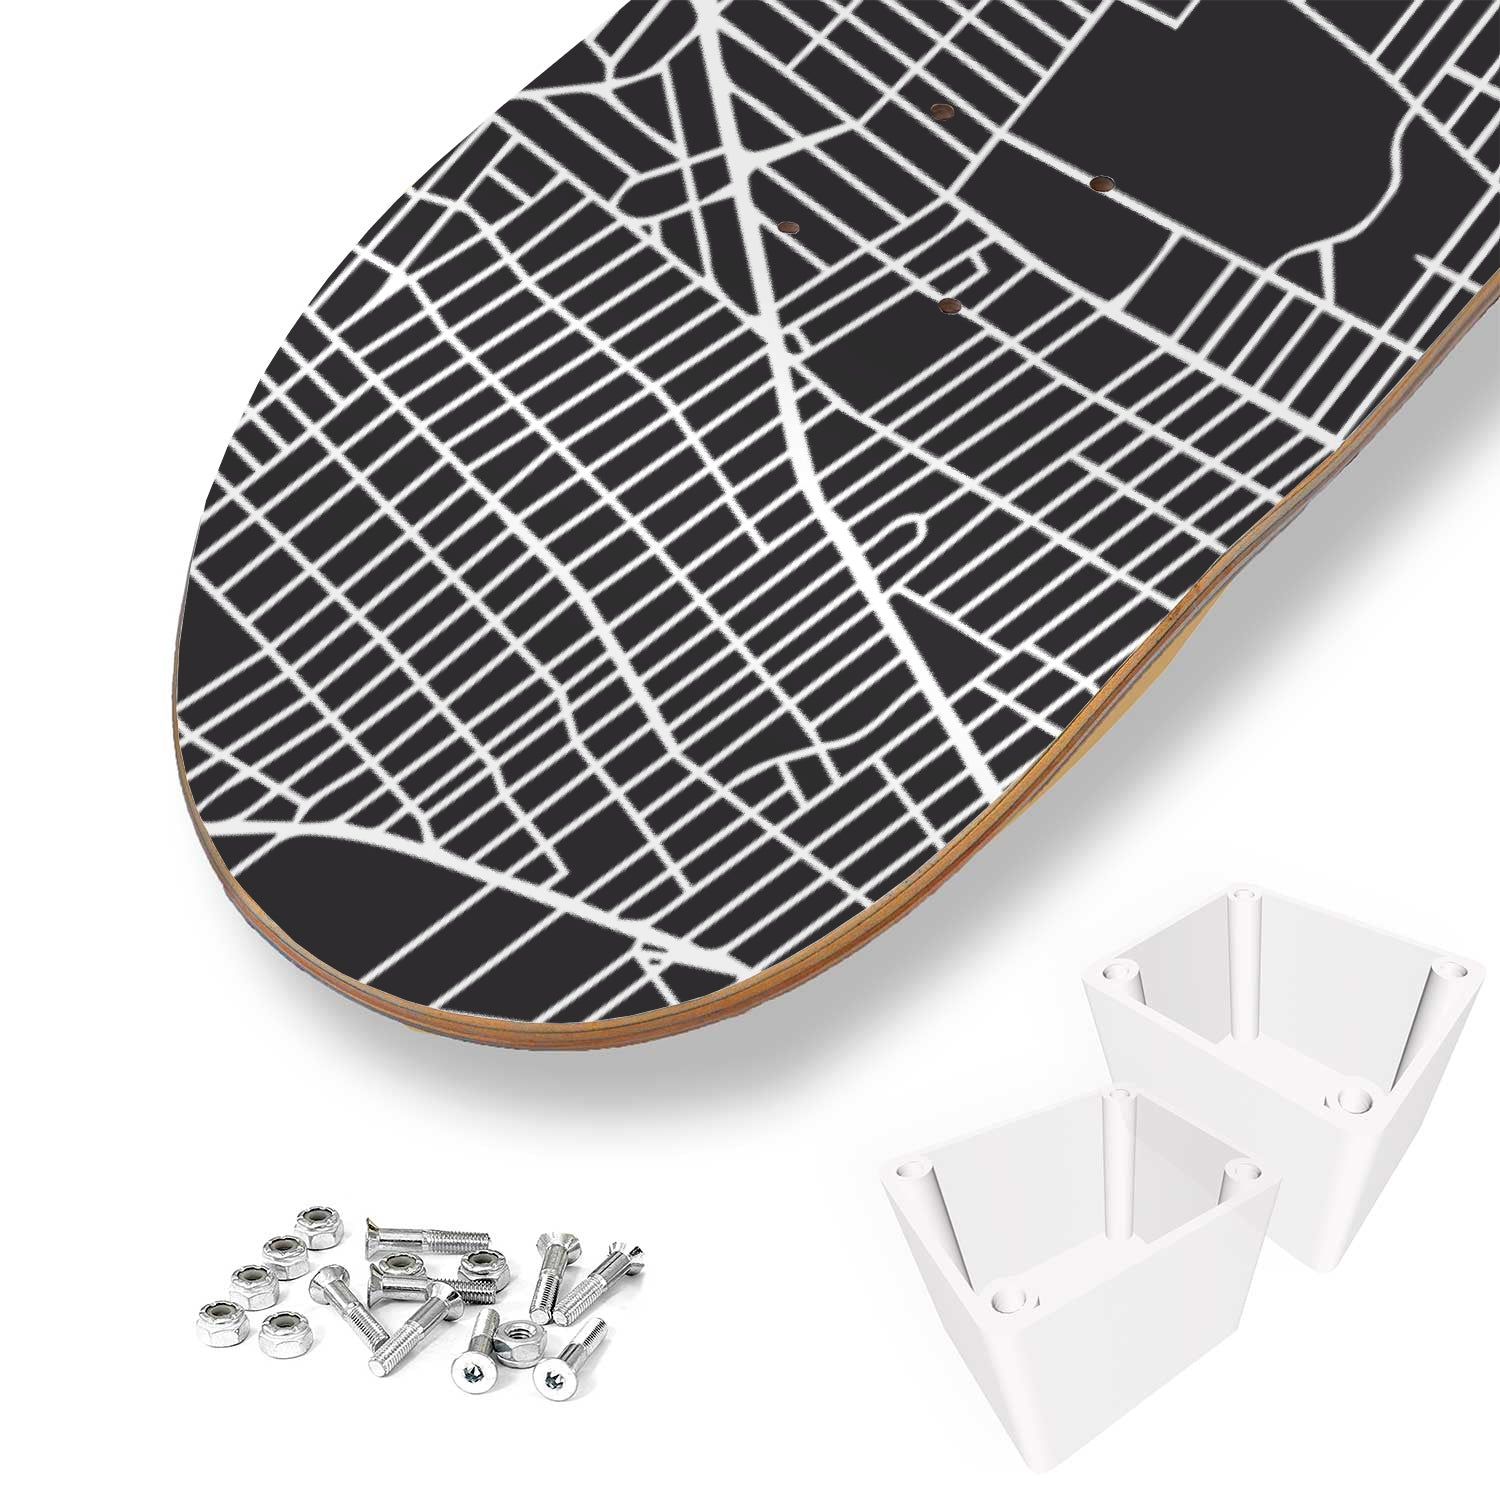 City Maps Hollywood (USA) - Skater Wall